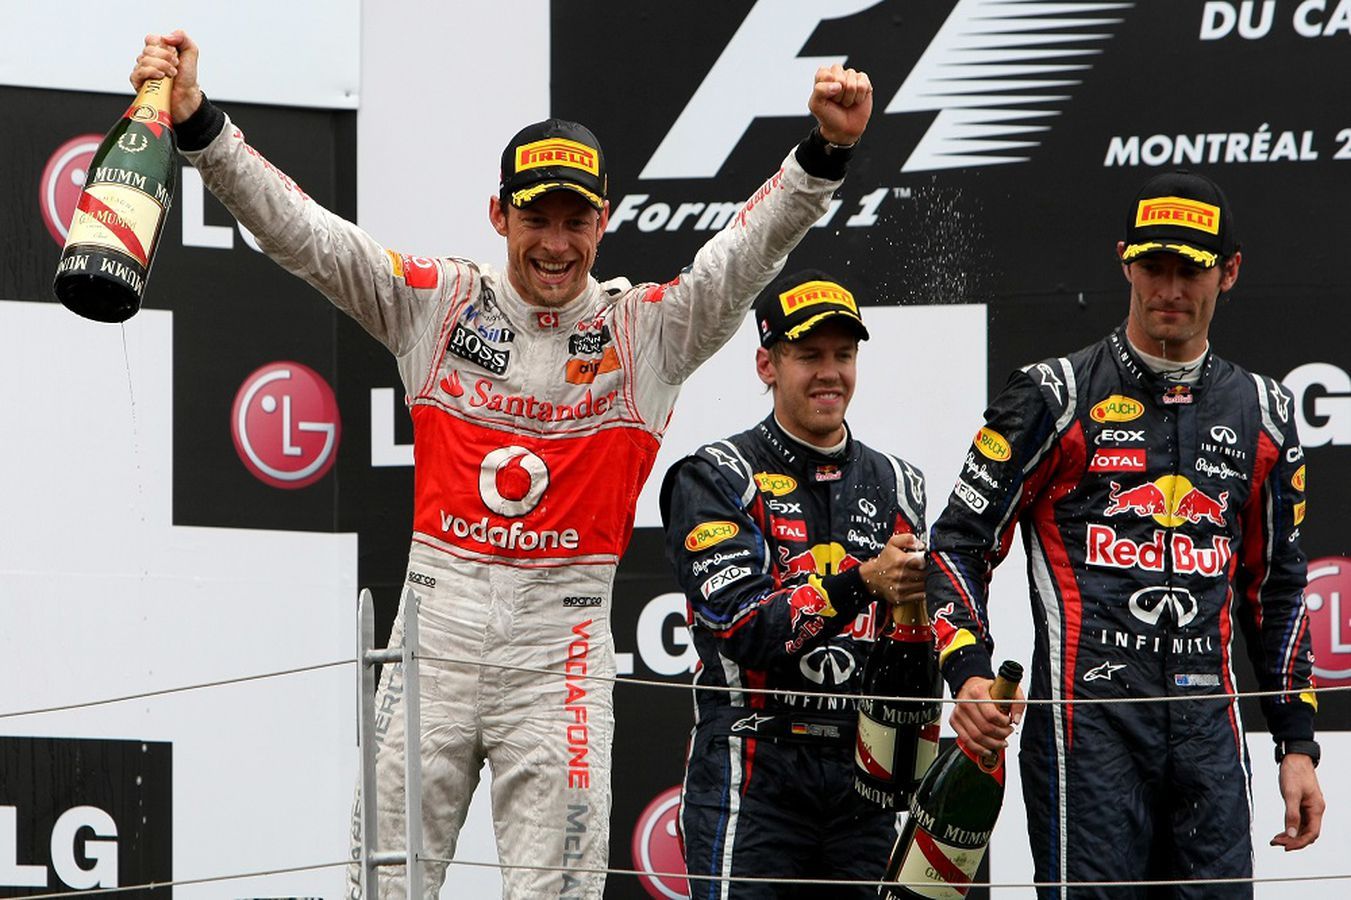 Jenson Button won the 2011 Canadian Grand Prix